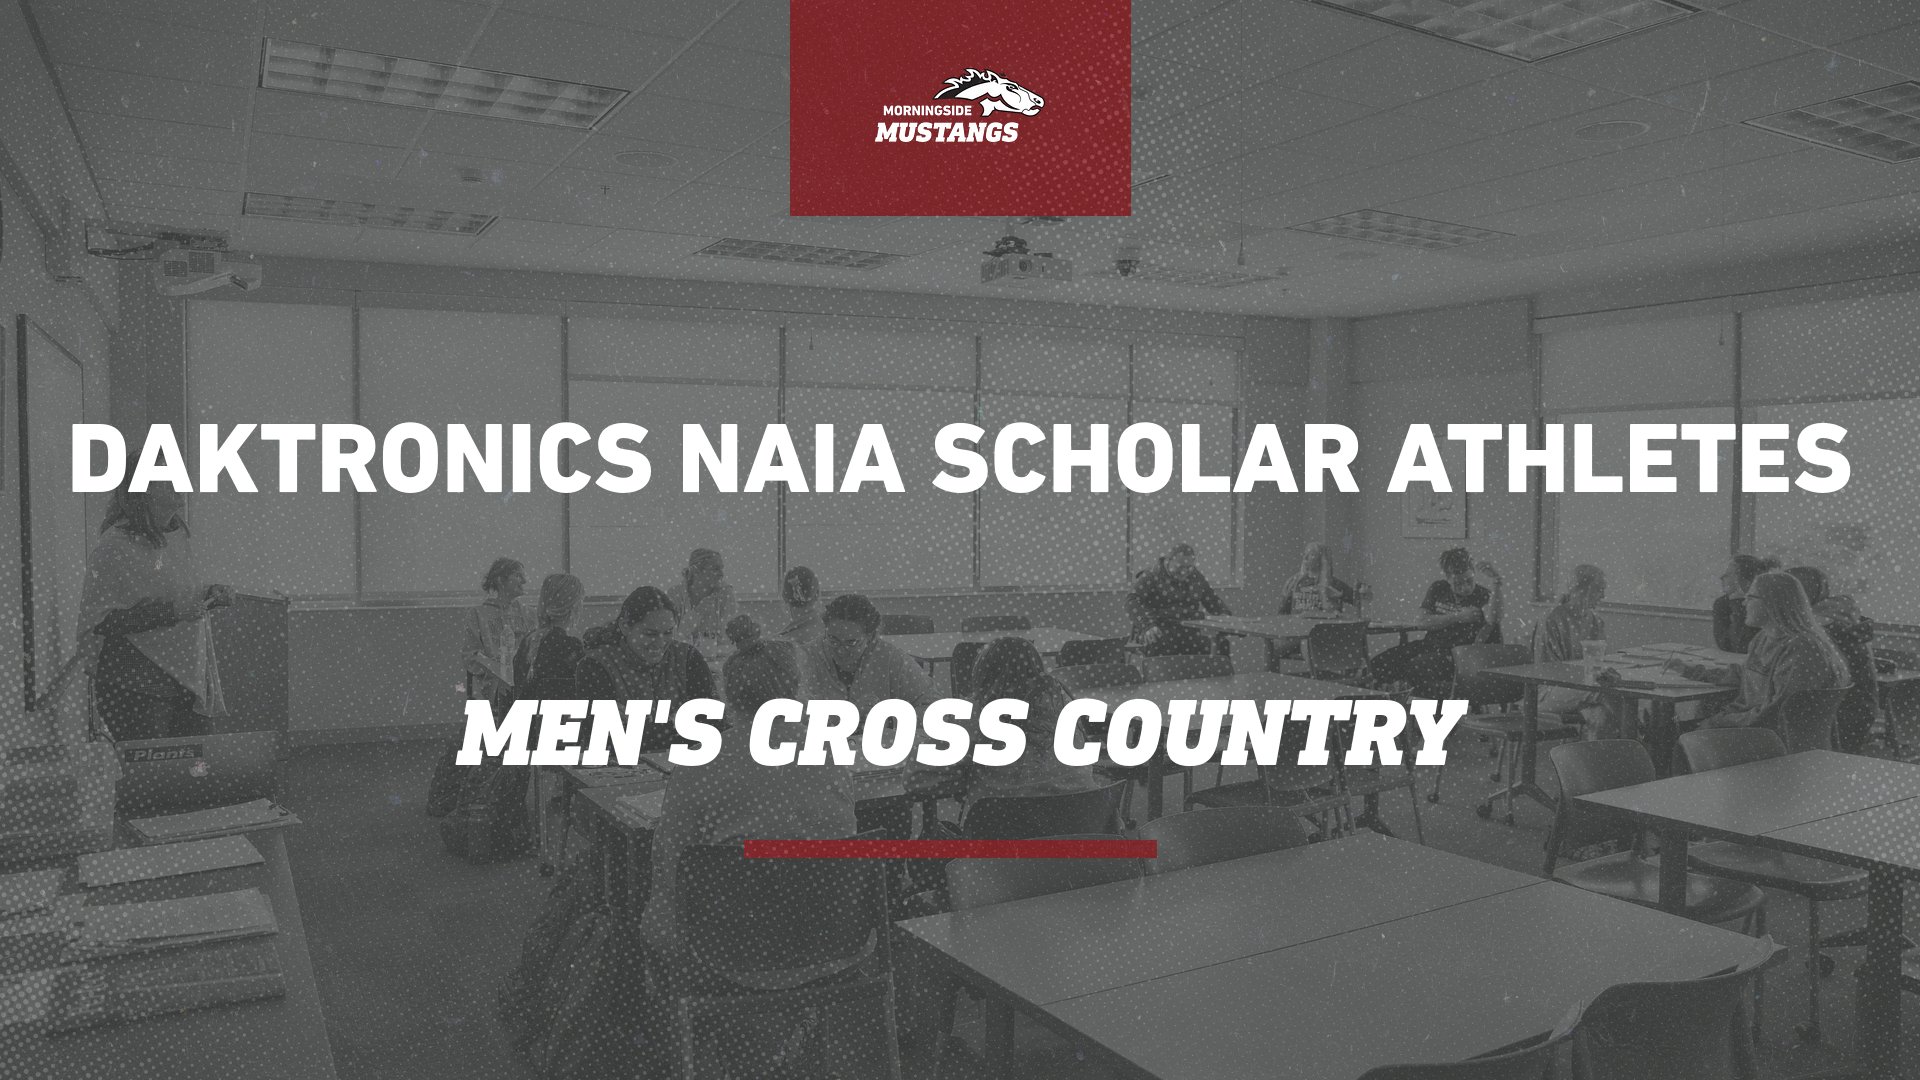 Daktronics NAIA Scholar Athletes - Men's Cross Country